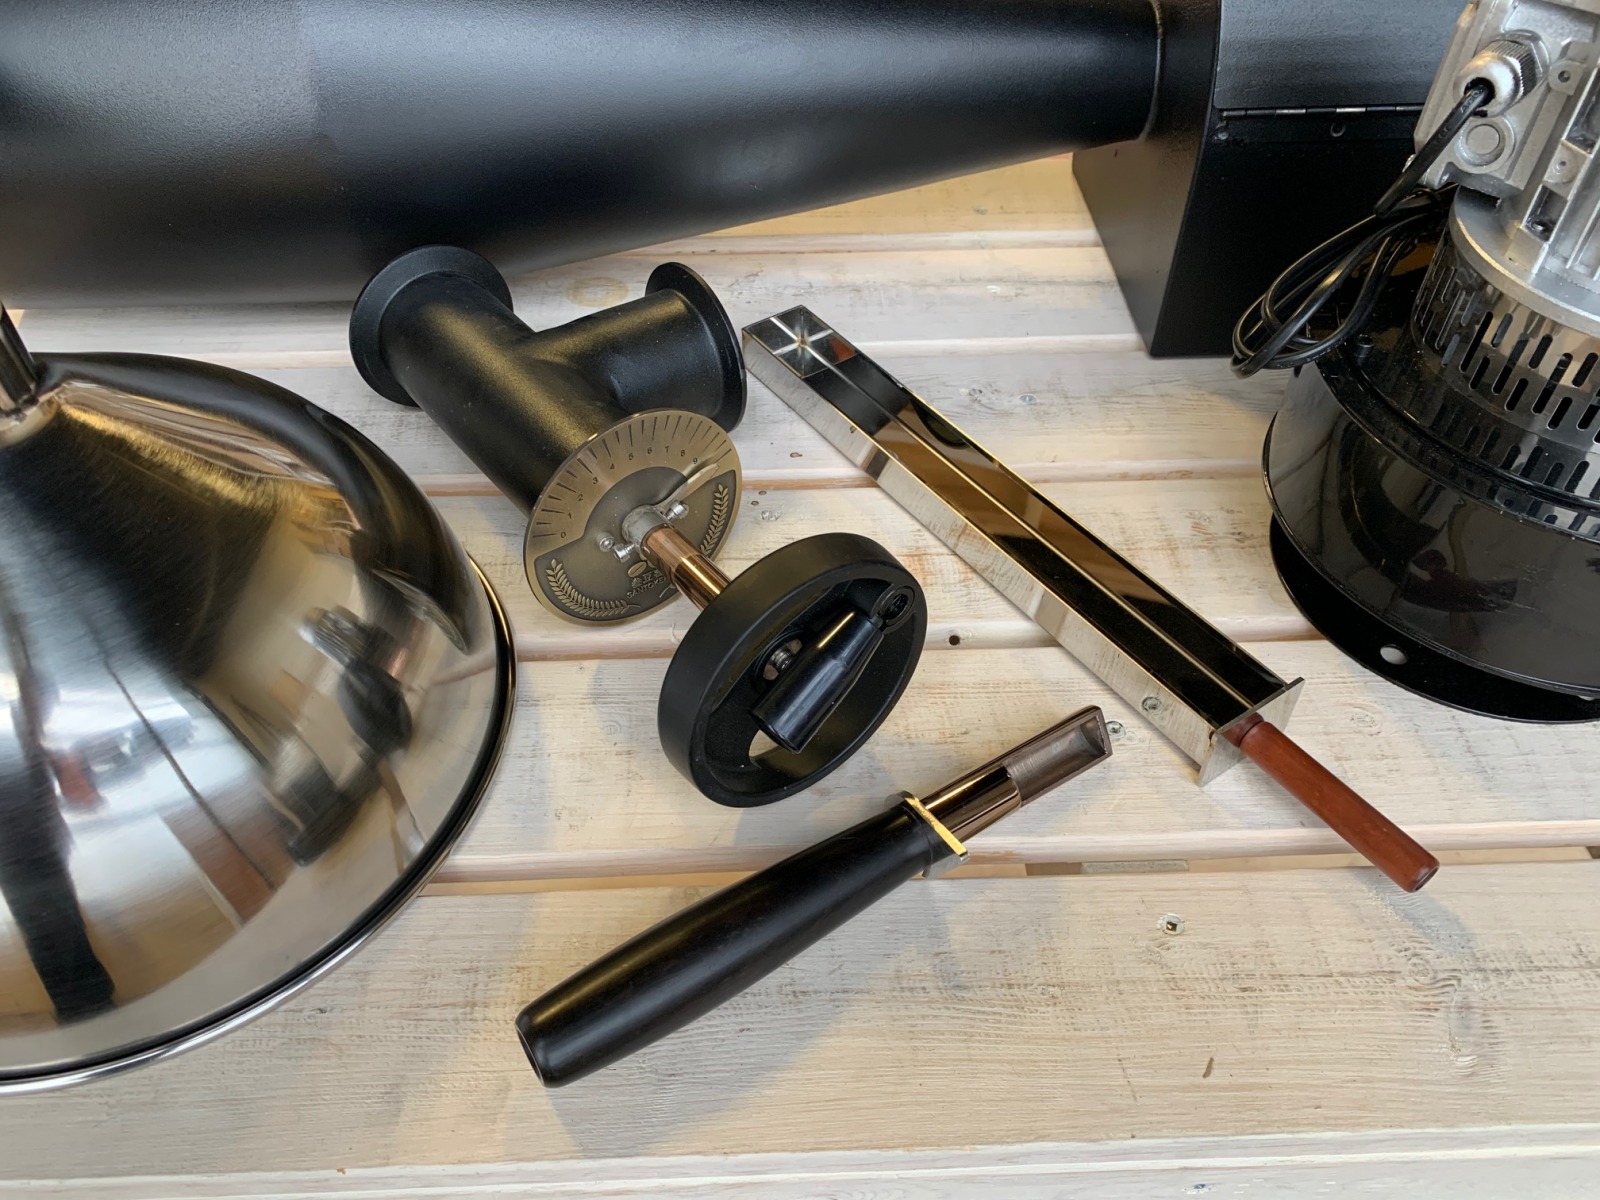 Santoker 3 kg roaster new arrival - accessory details